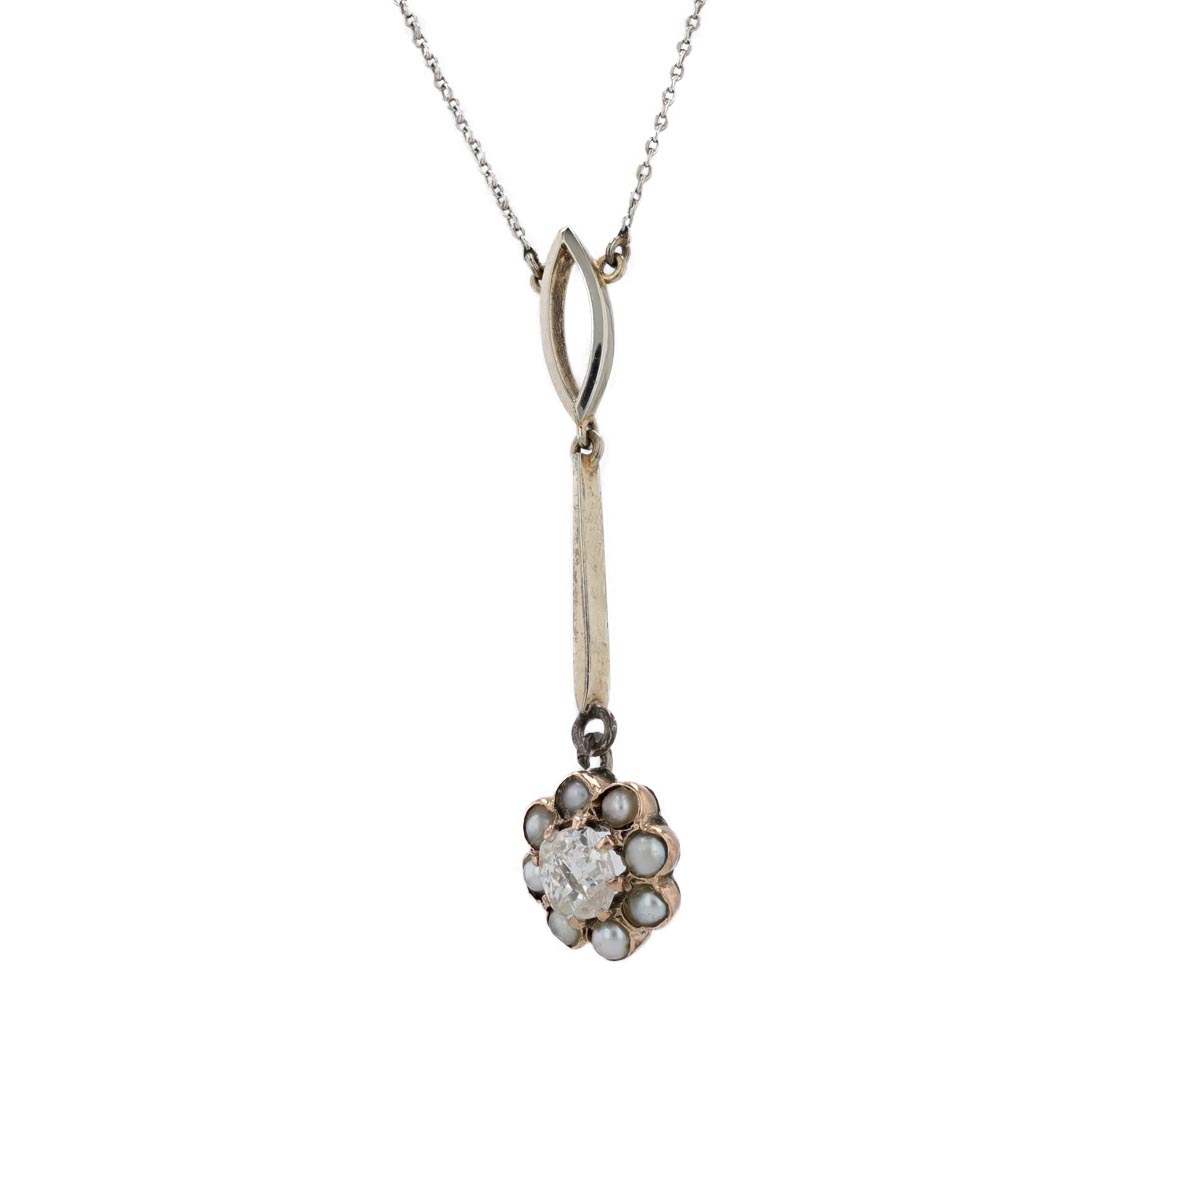 Tour de cou pendentif diamant taille ancienne entourage perle